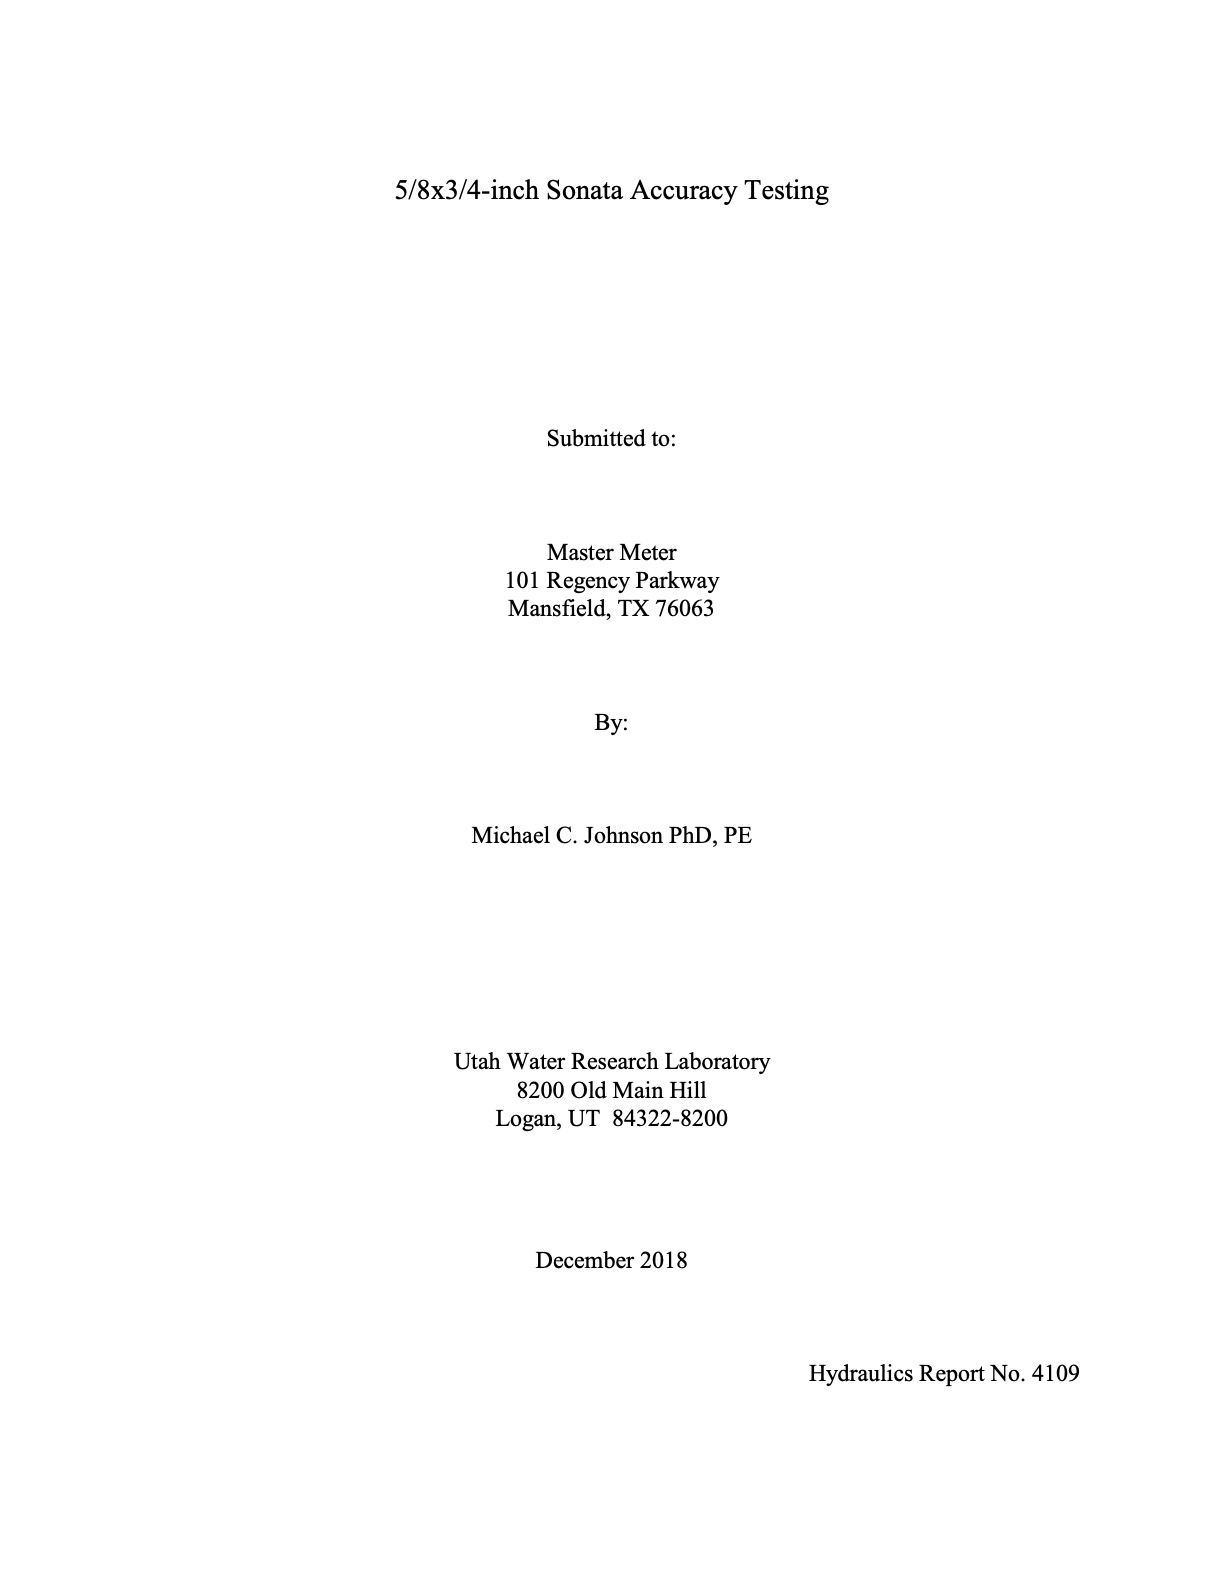 Sonata Ultrasonic Independent Test & Validation Report